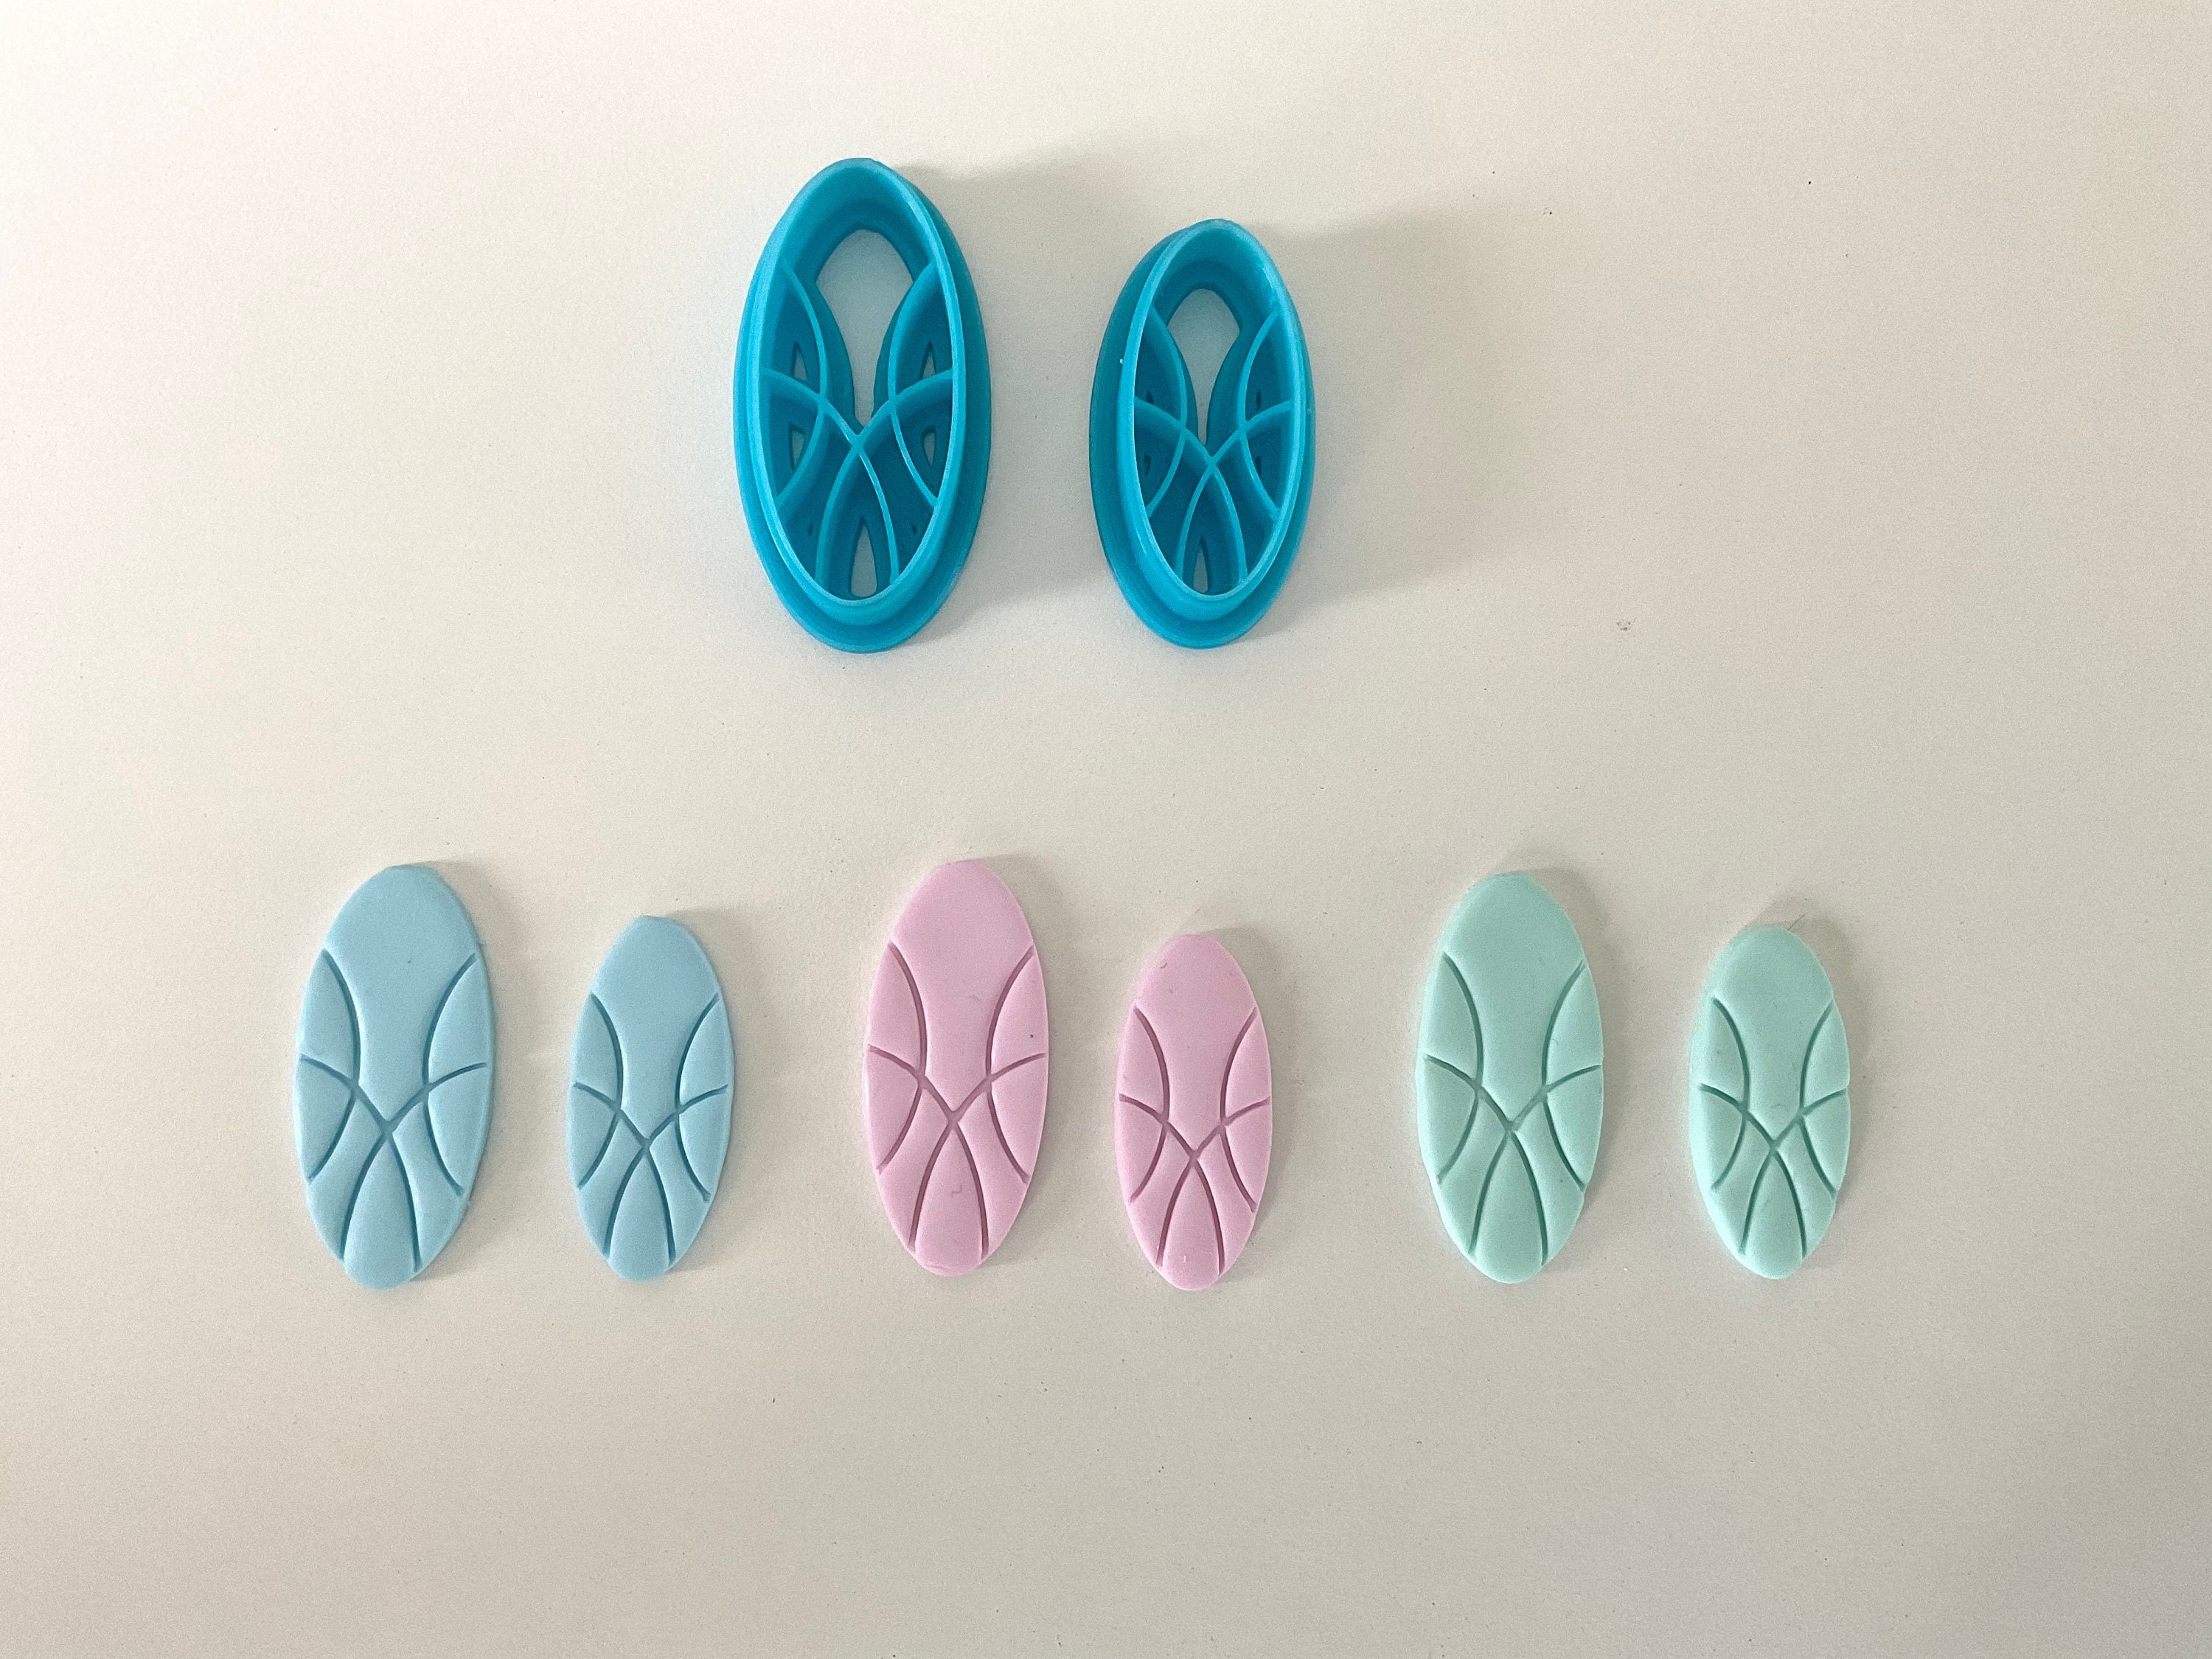 DIY Polymer Clay Earrings Kit Design Your Own Clay Earrings 